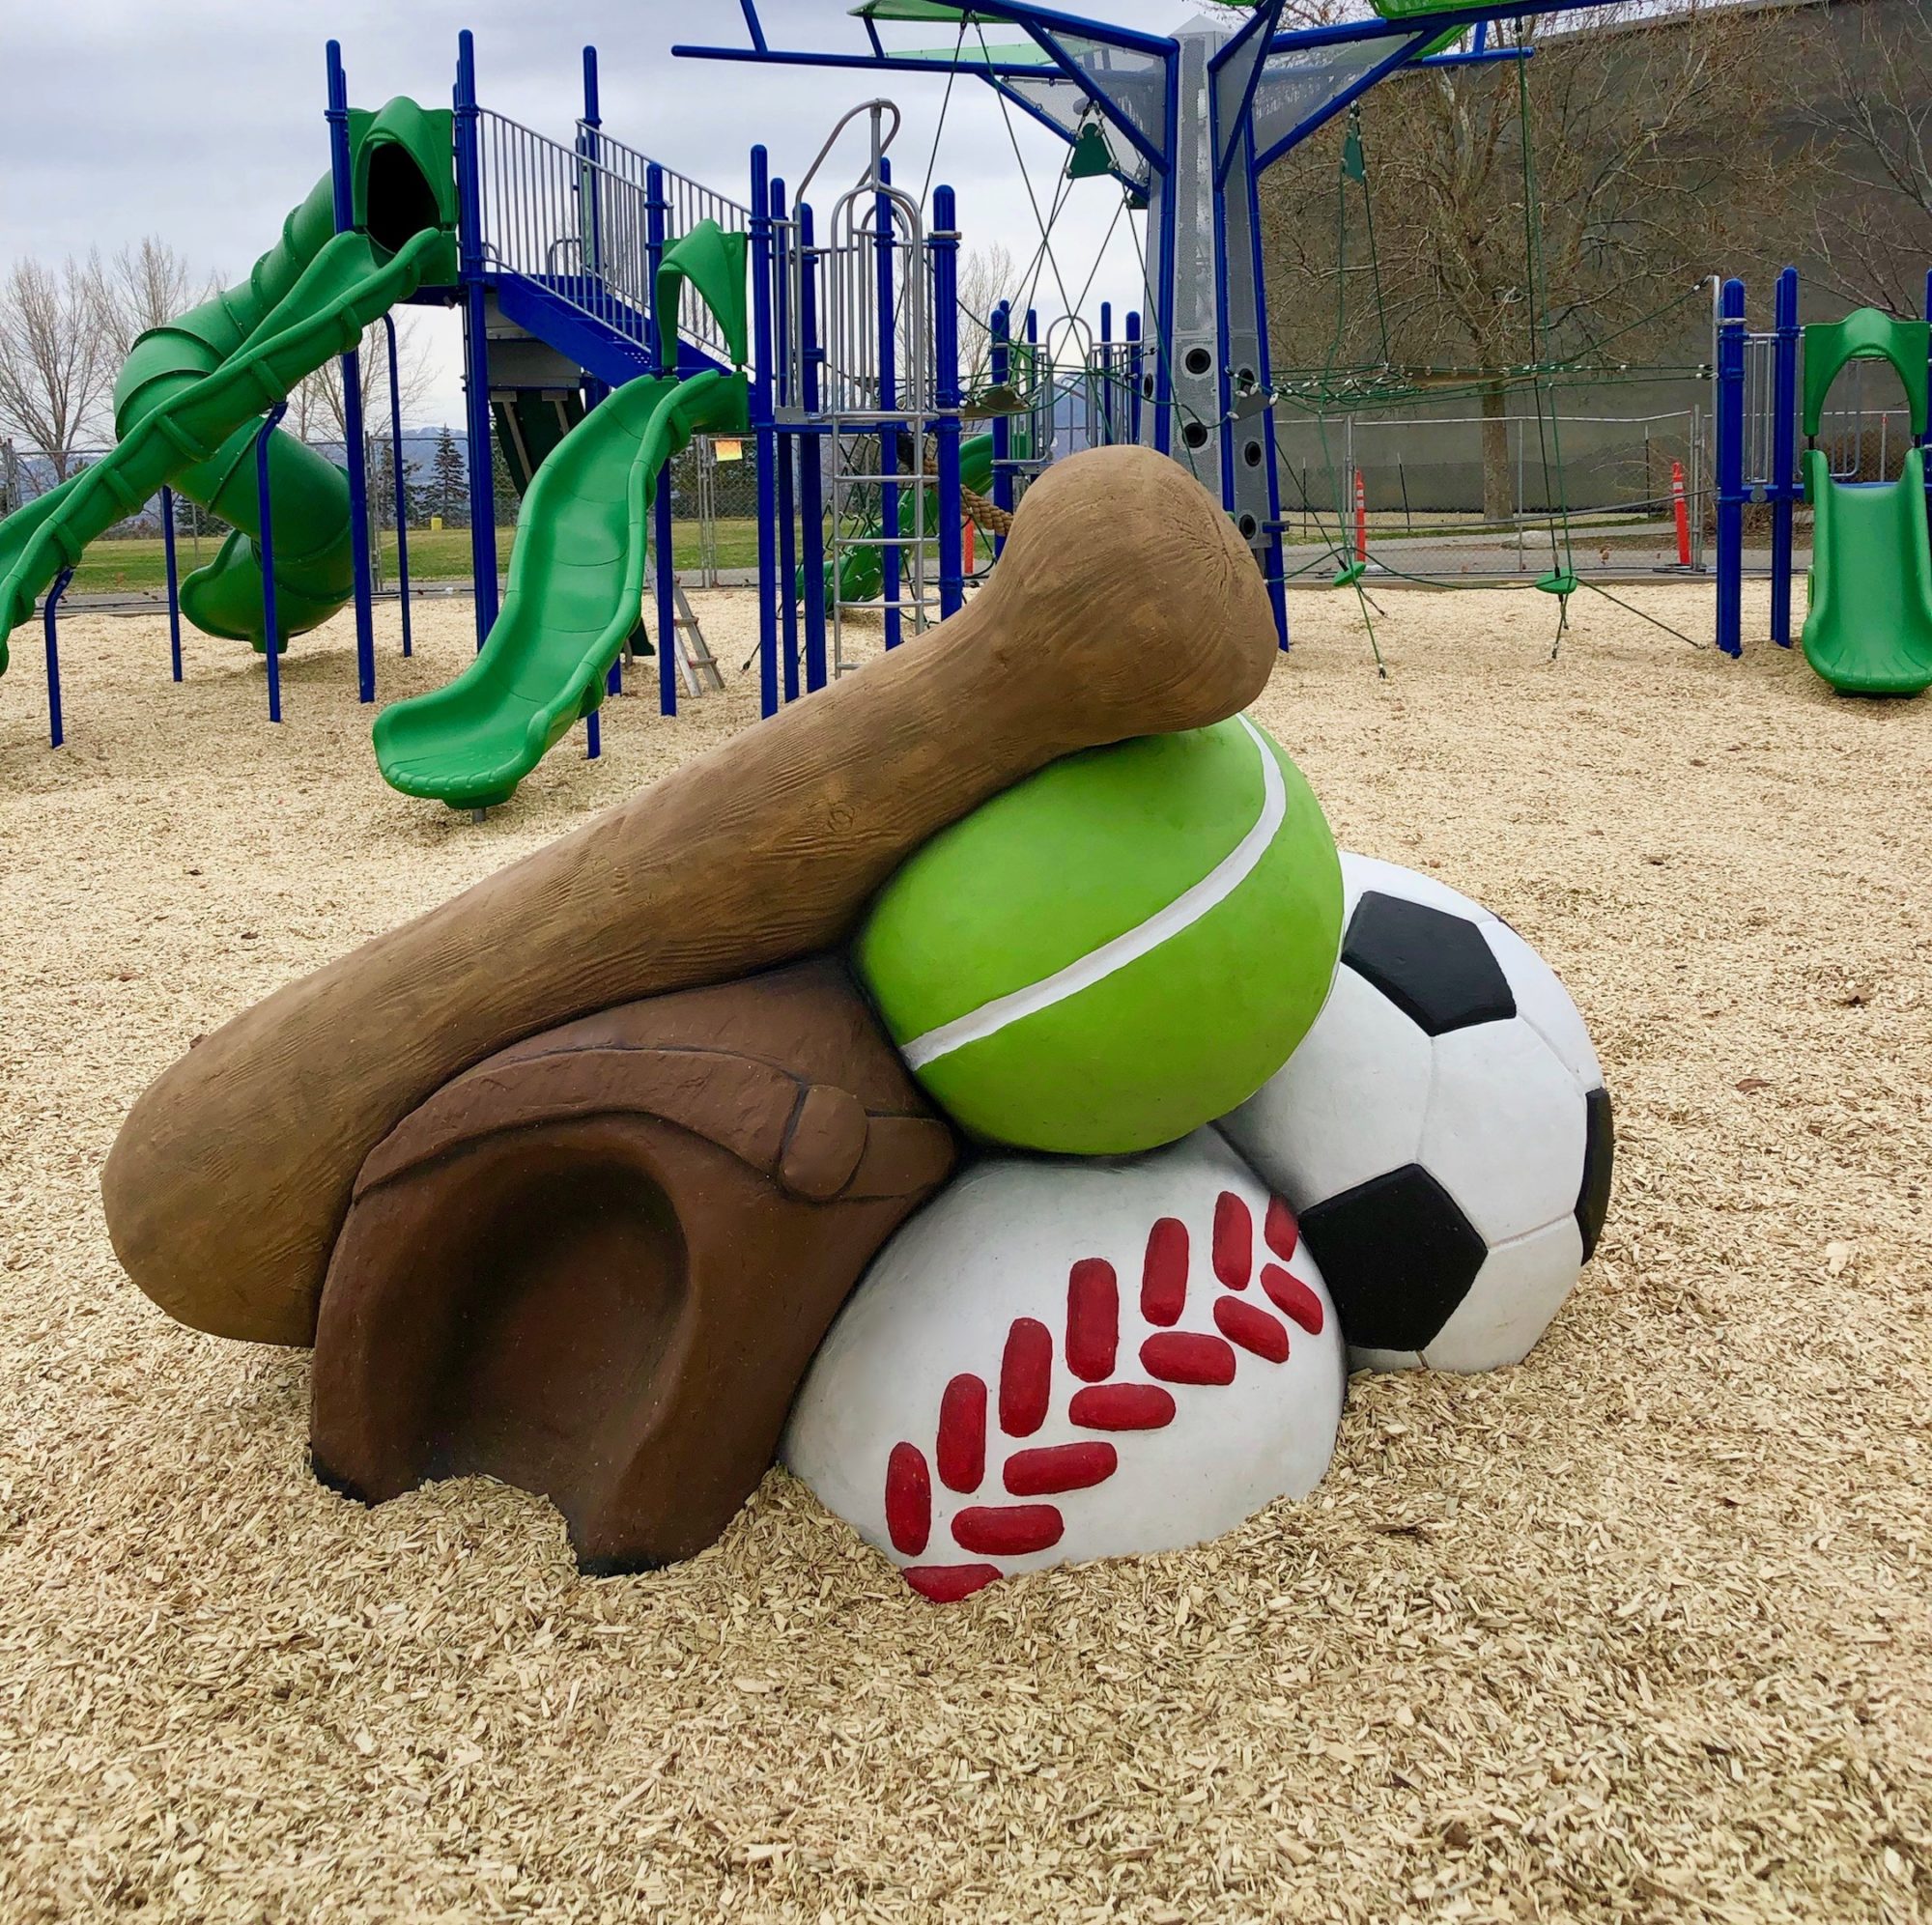 Sports Themed Playground